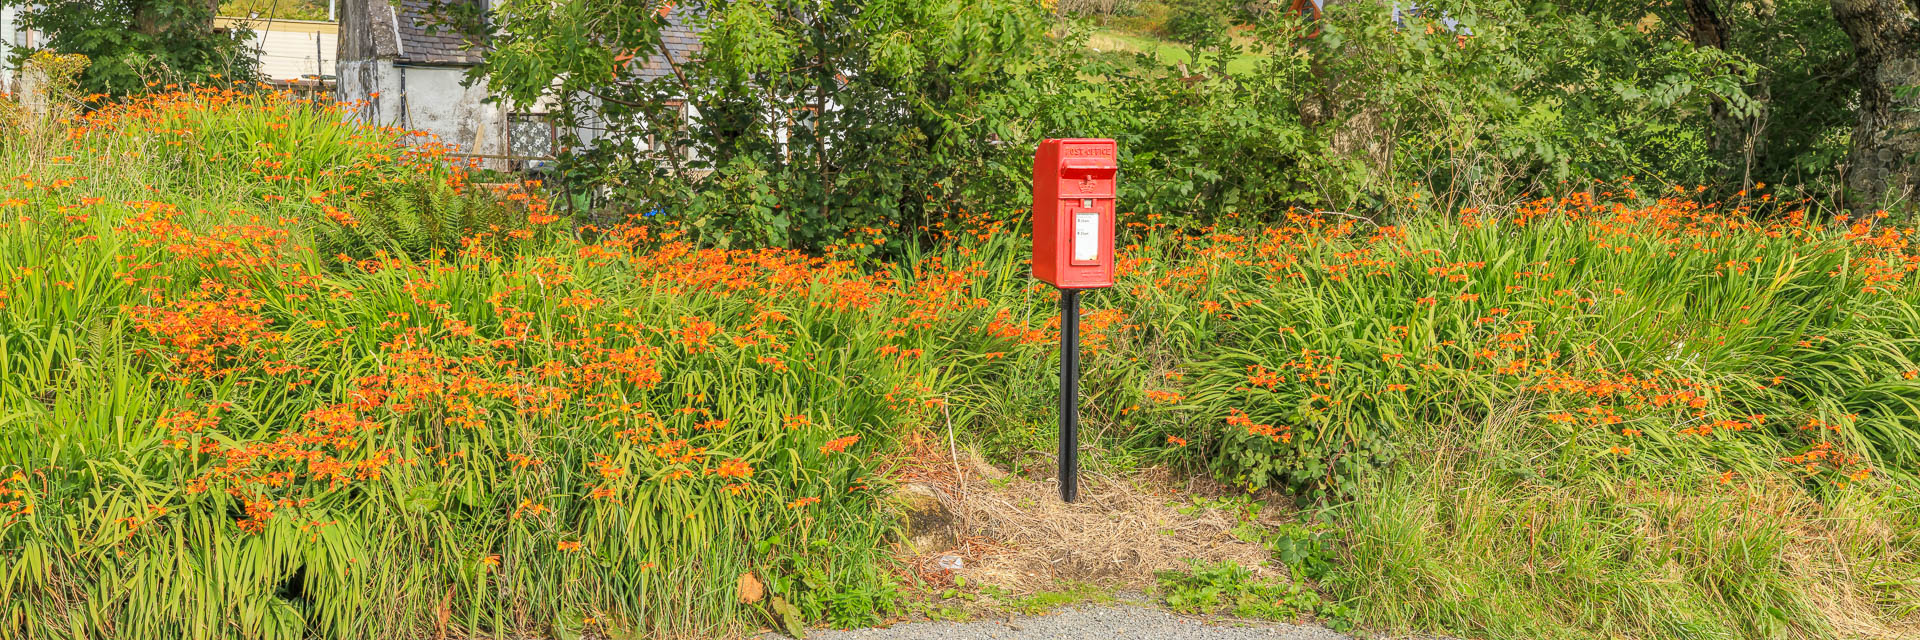 Scottish letterbox